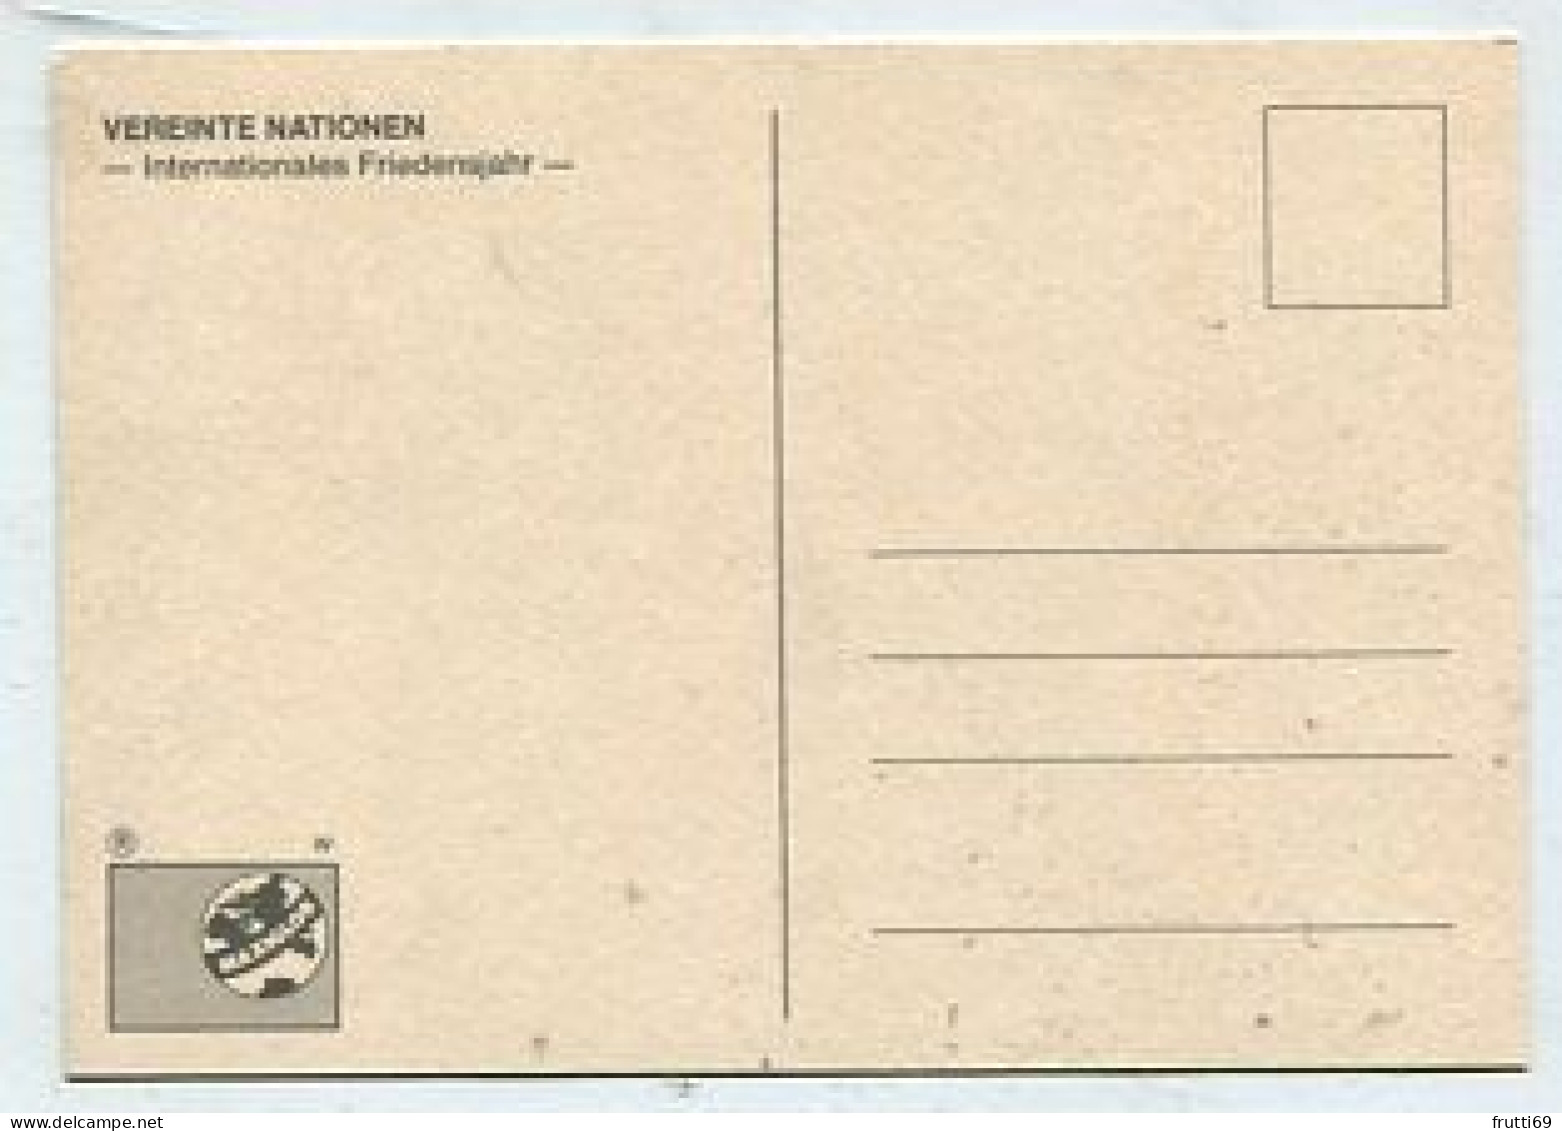 MC 158459 UNITED NATIONS - Wien - 1986 - Internationales Friedensjahr - Maximum Cards